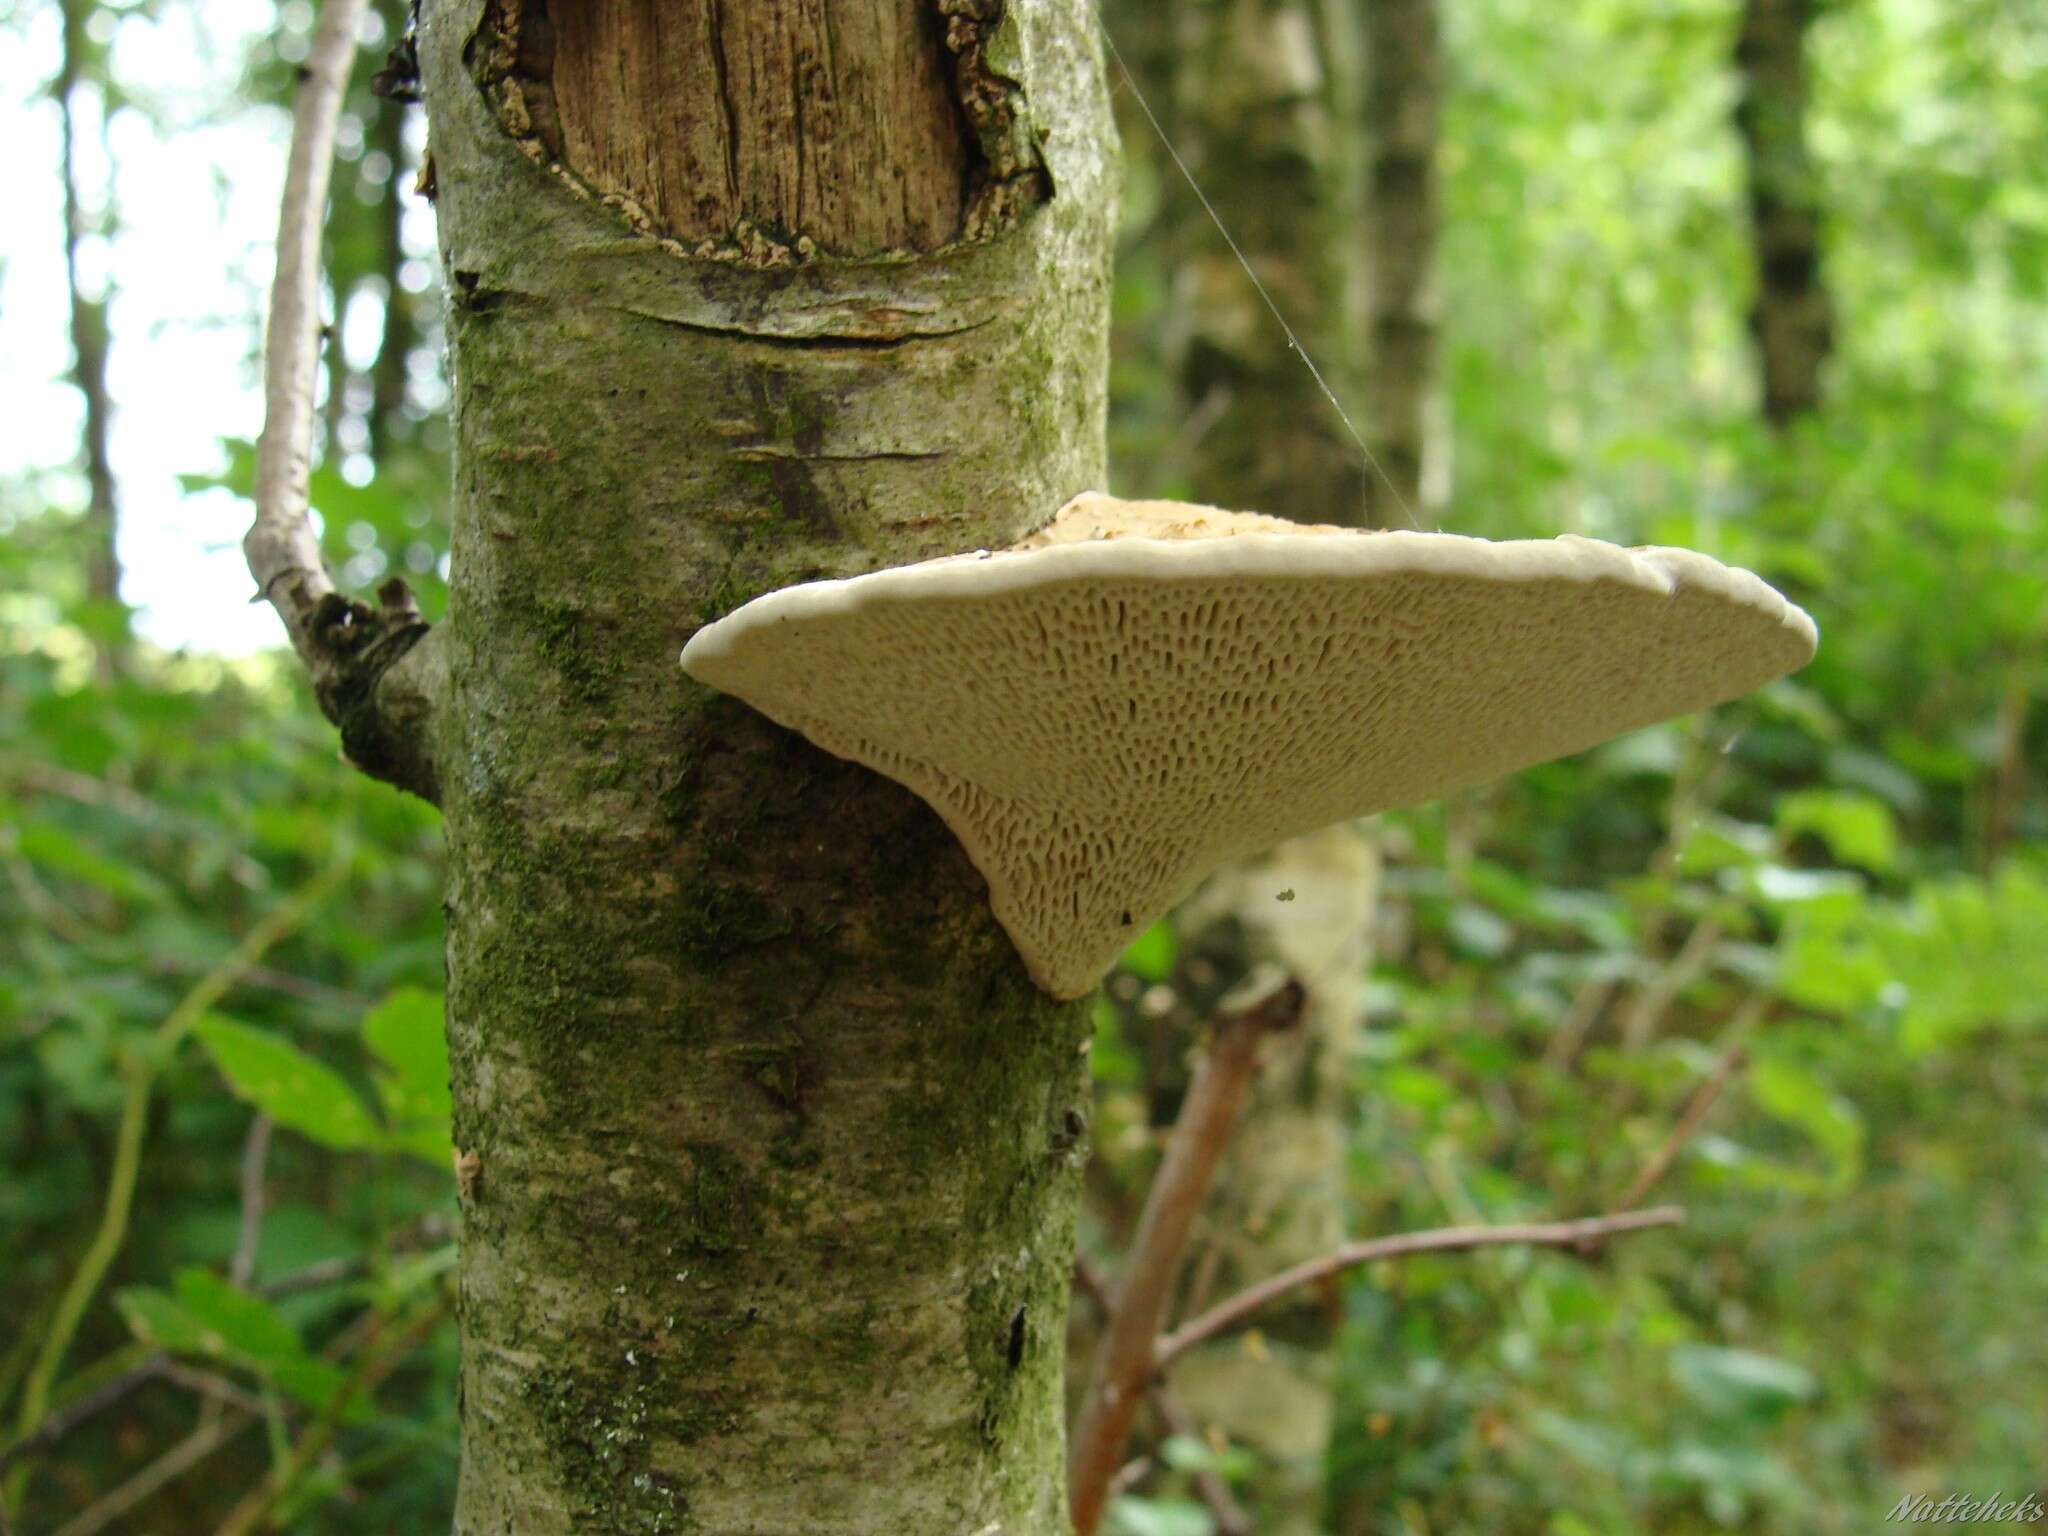 Image of birch polypore